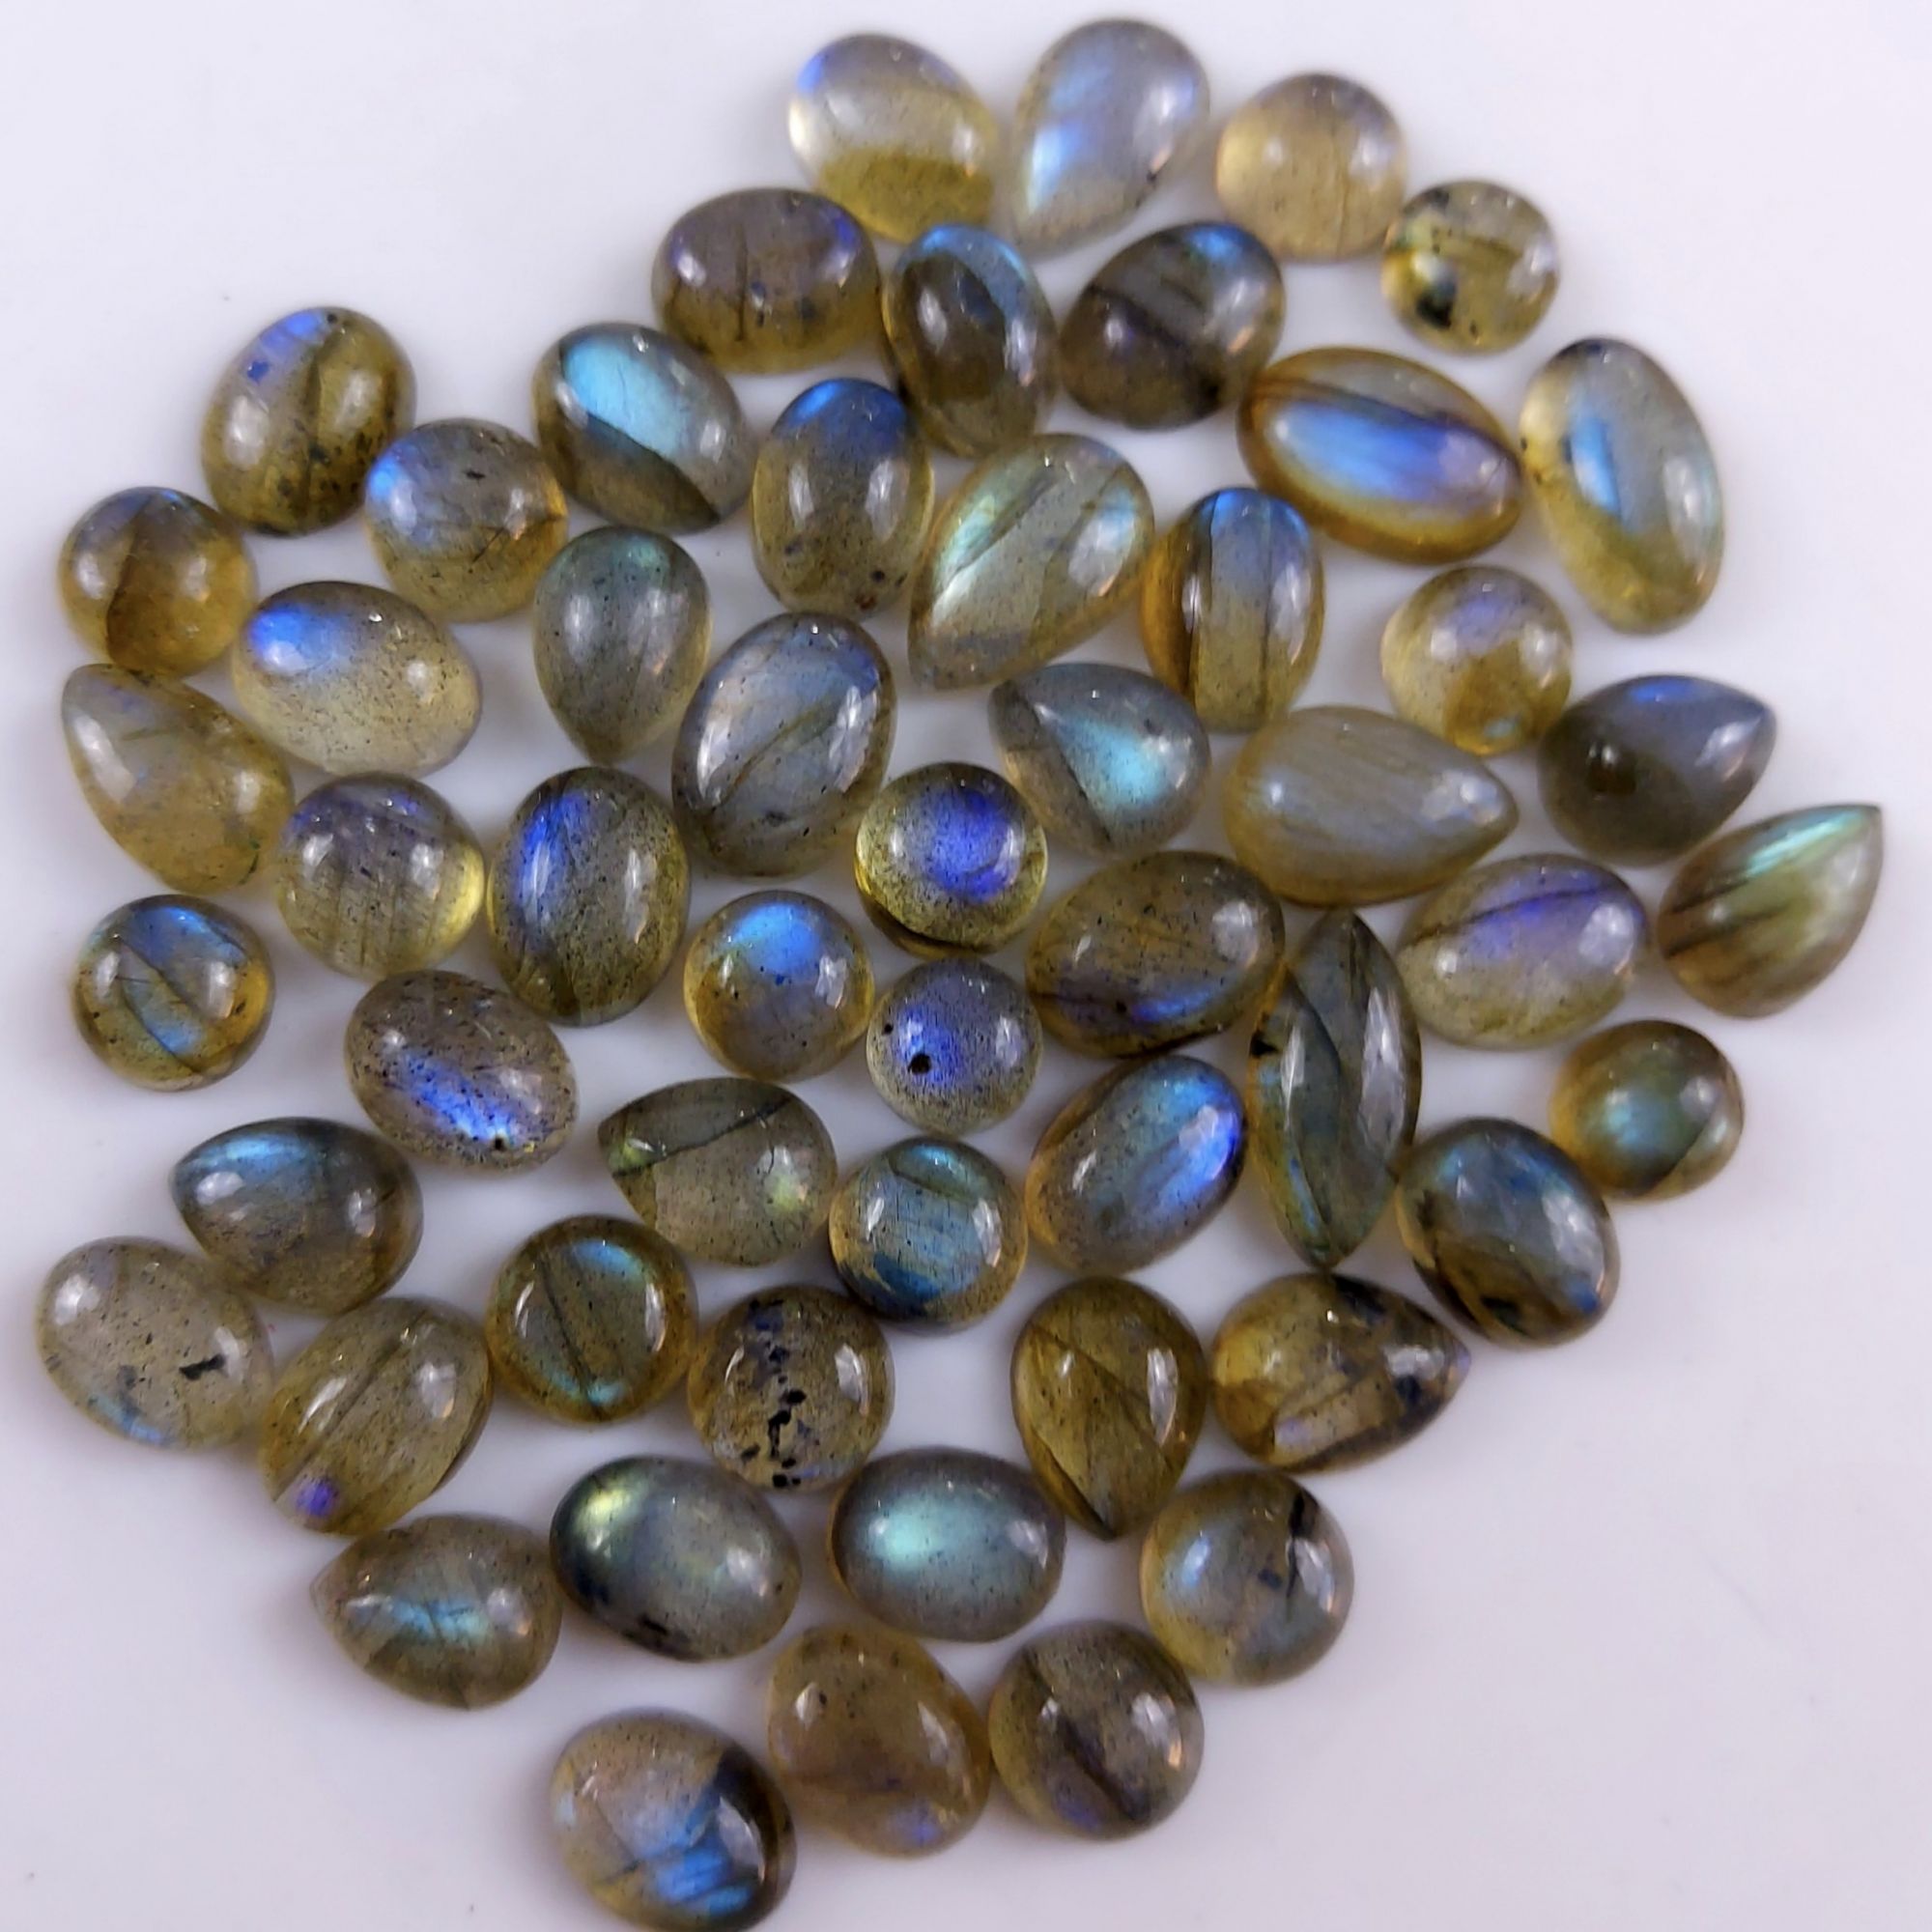 54 Pcs87Cts Natural Multifire Labradorite Loose Cabochon Gemstone Lot for Jewelry Making  8x3 5x5mm#1071